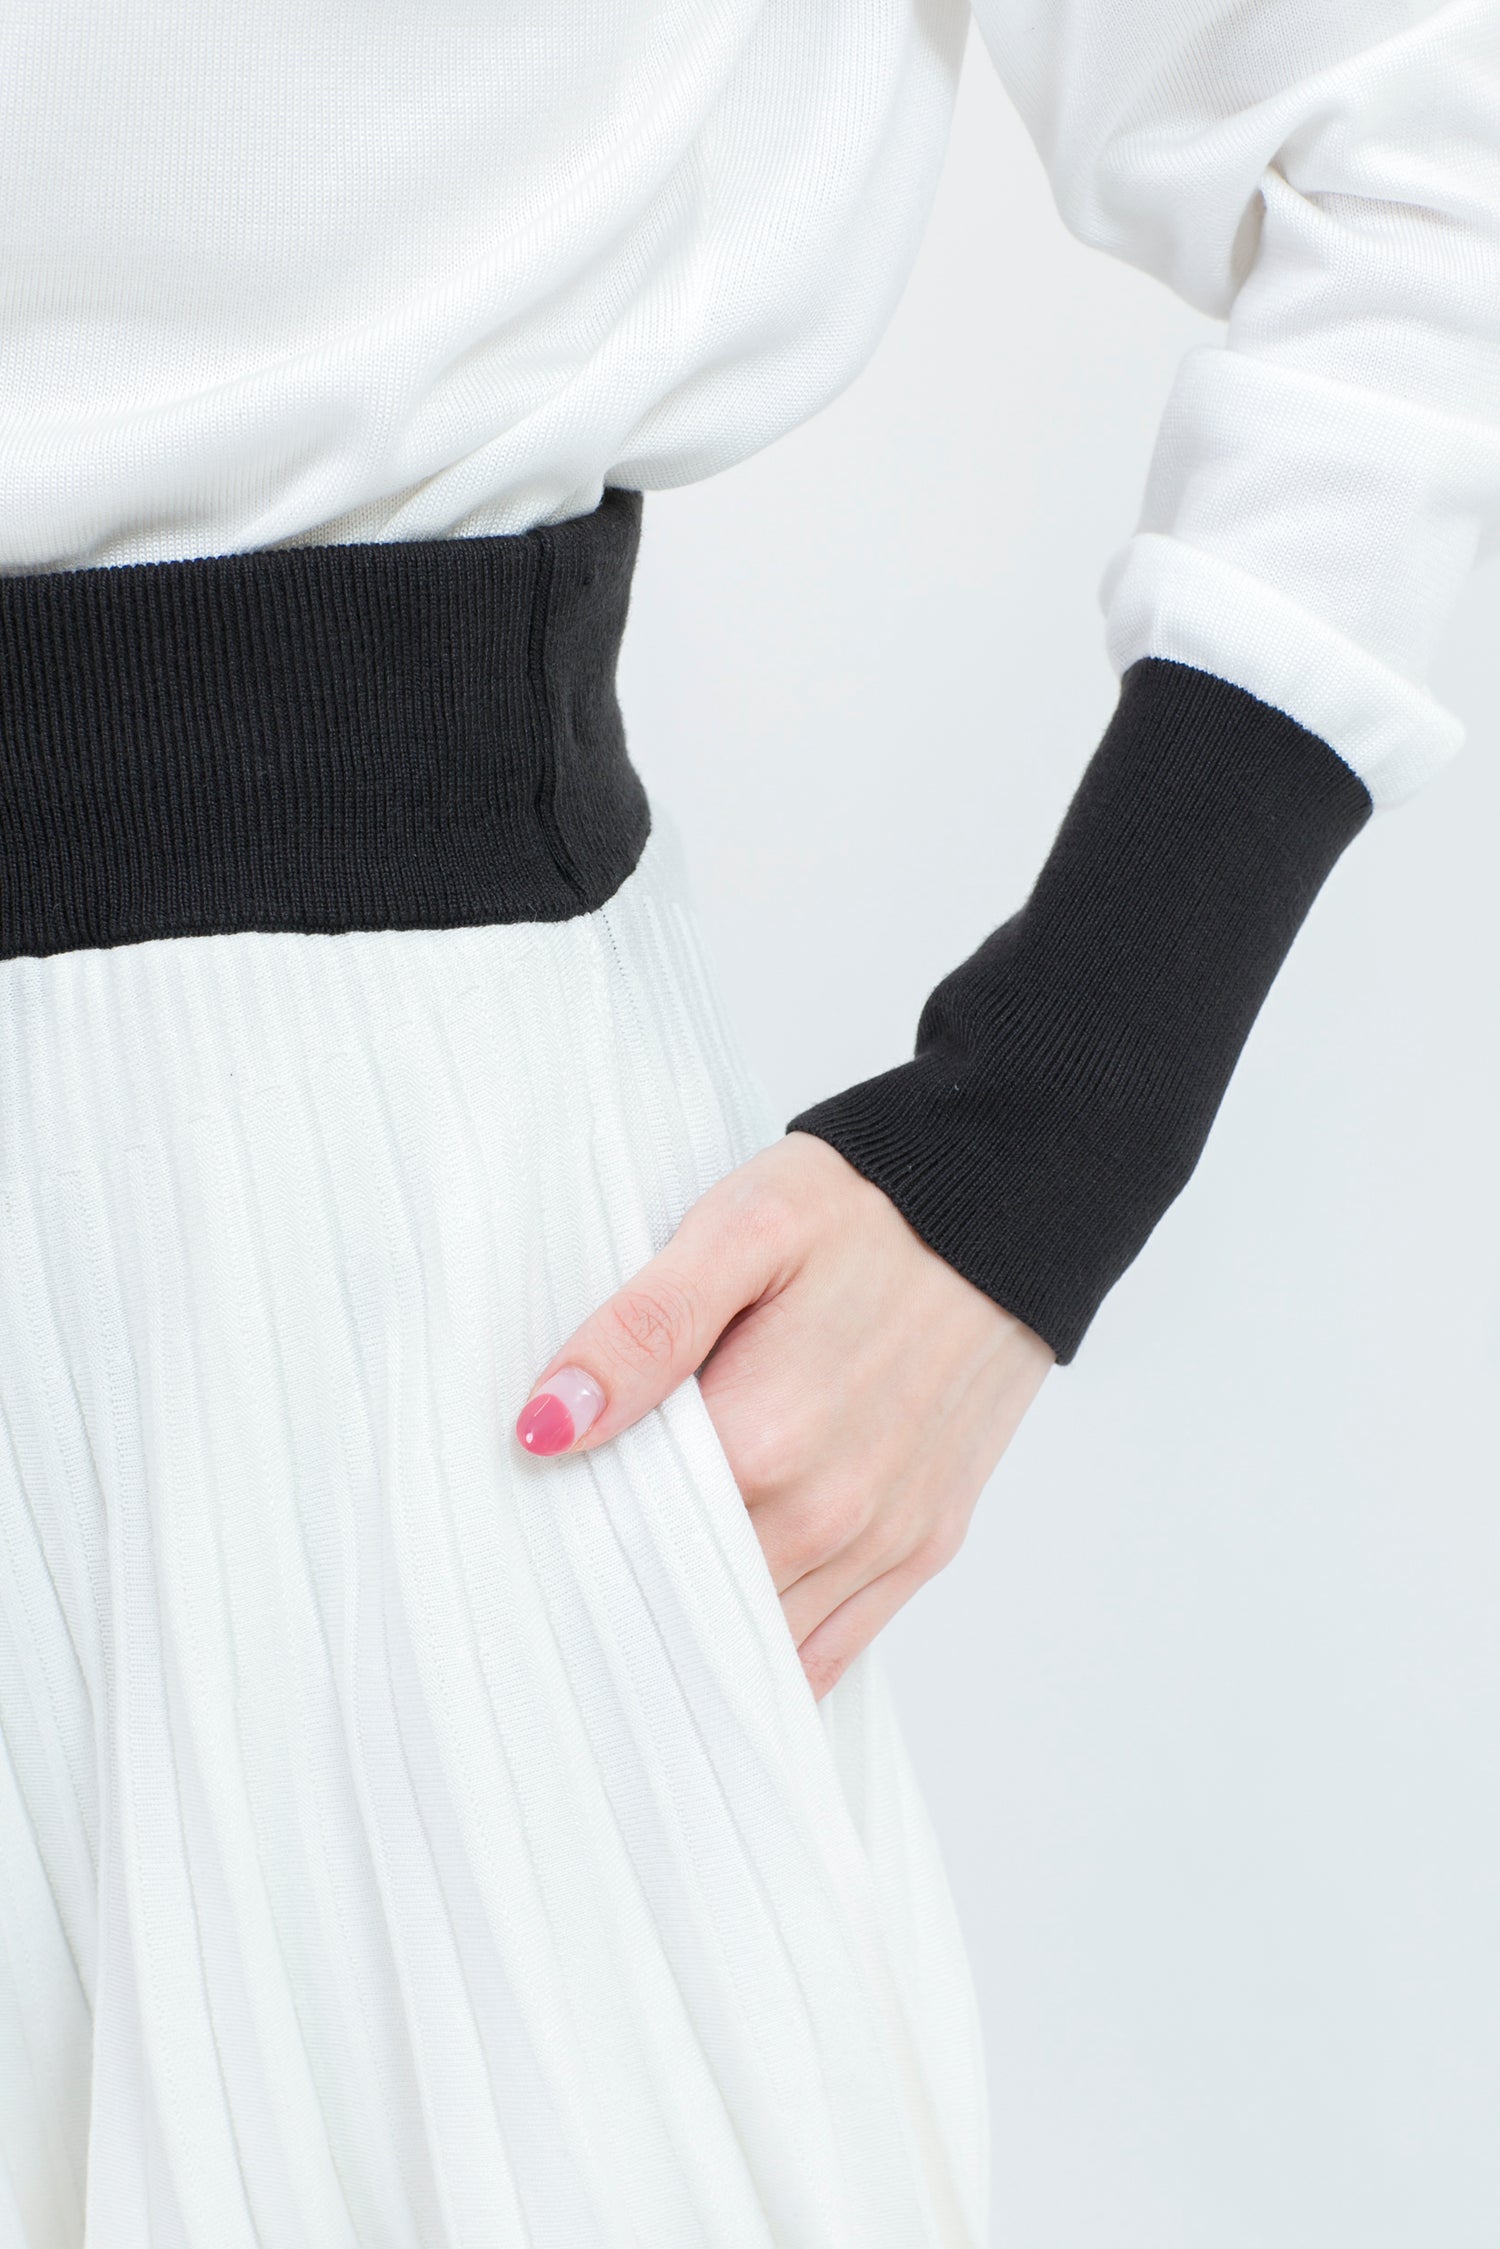 Pleated knit skirt (701H8516K)